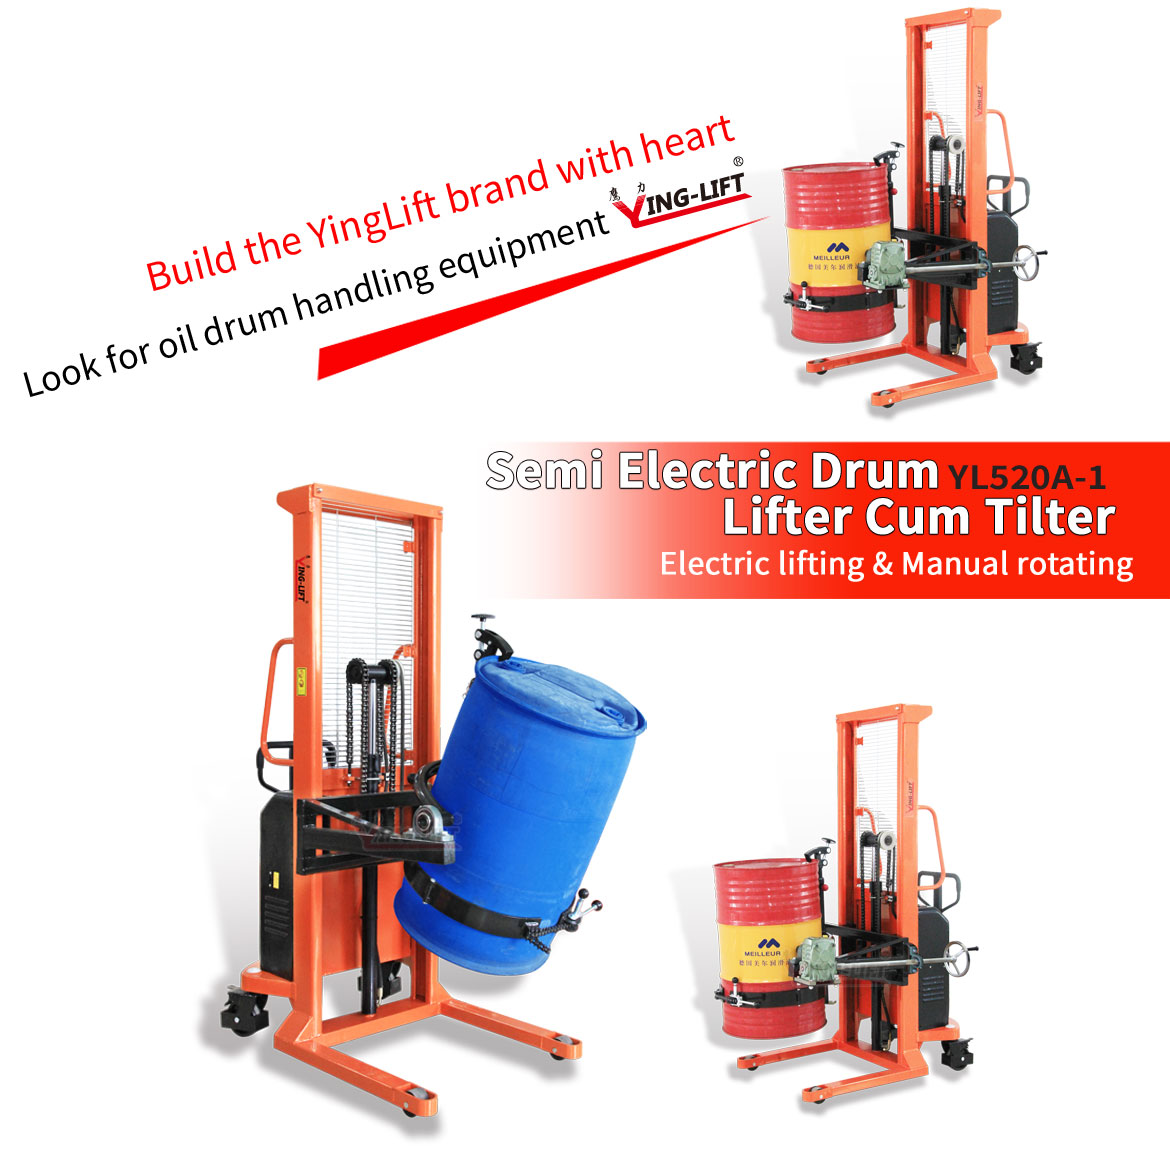 Semi Electric Drum Lifter Cum Tilter